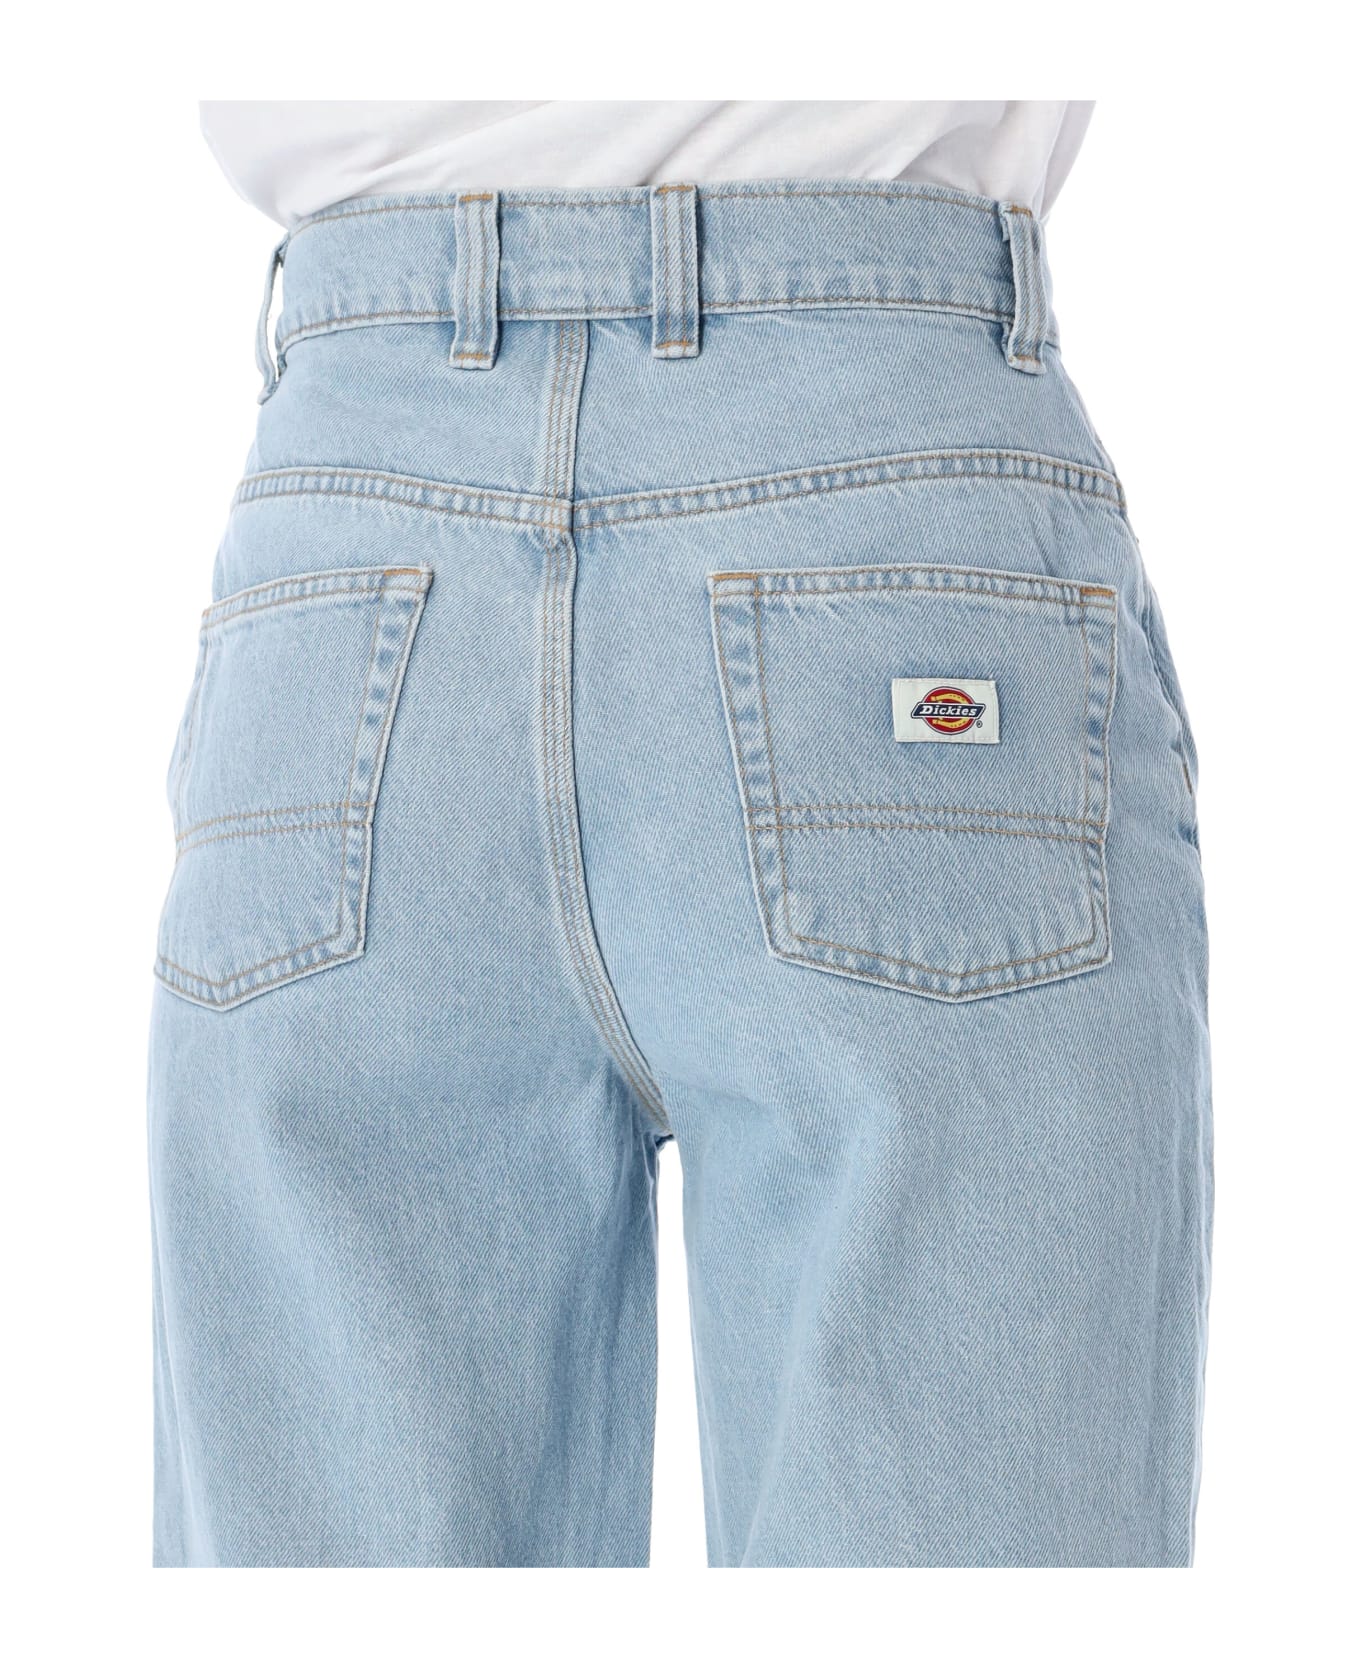 Dickies Thomasville Denim Jeans - VINTAGE AGED BLUE